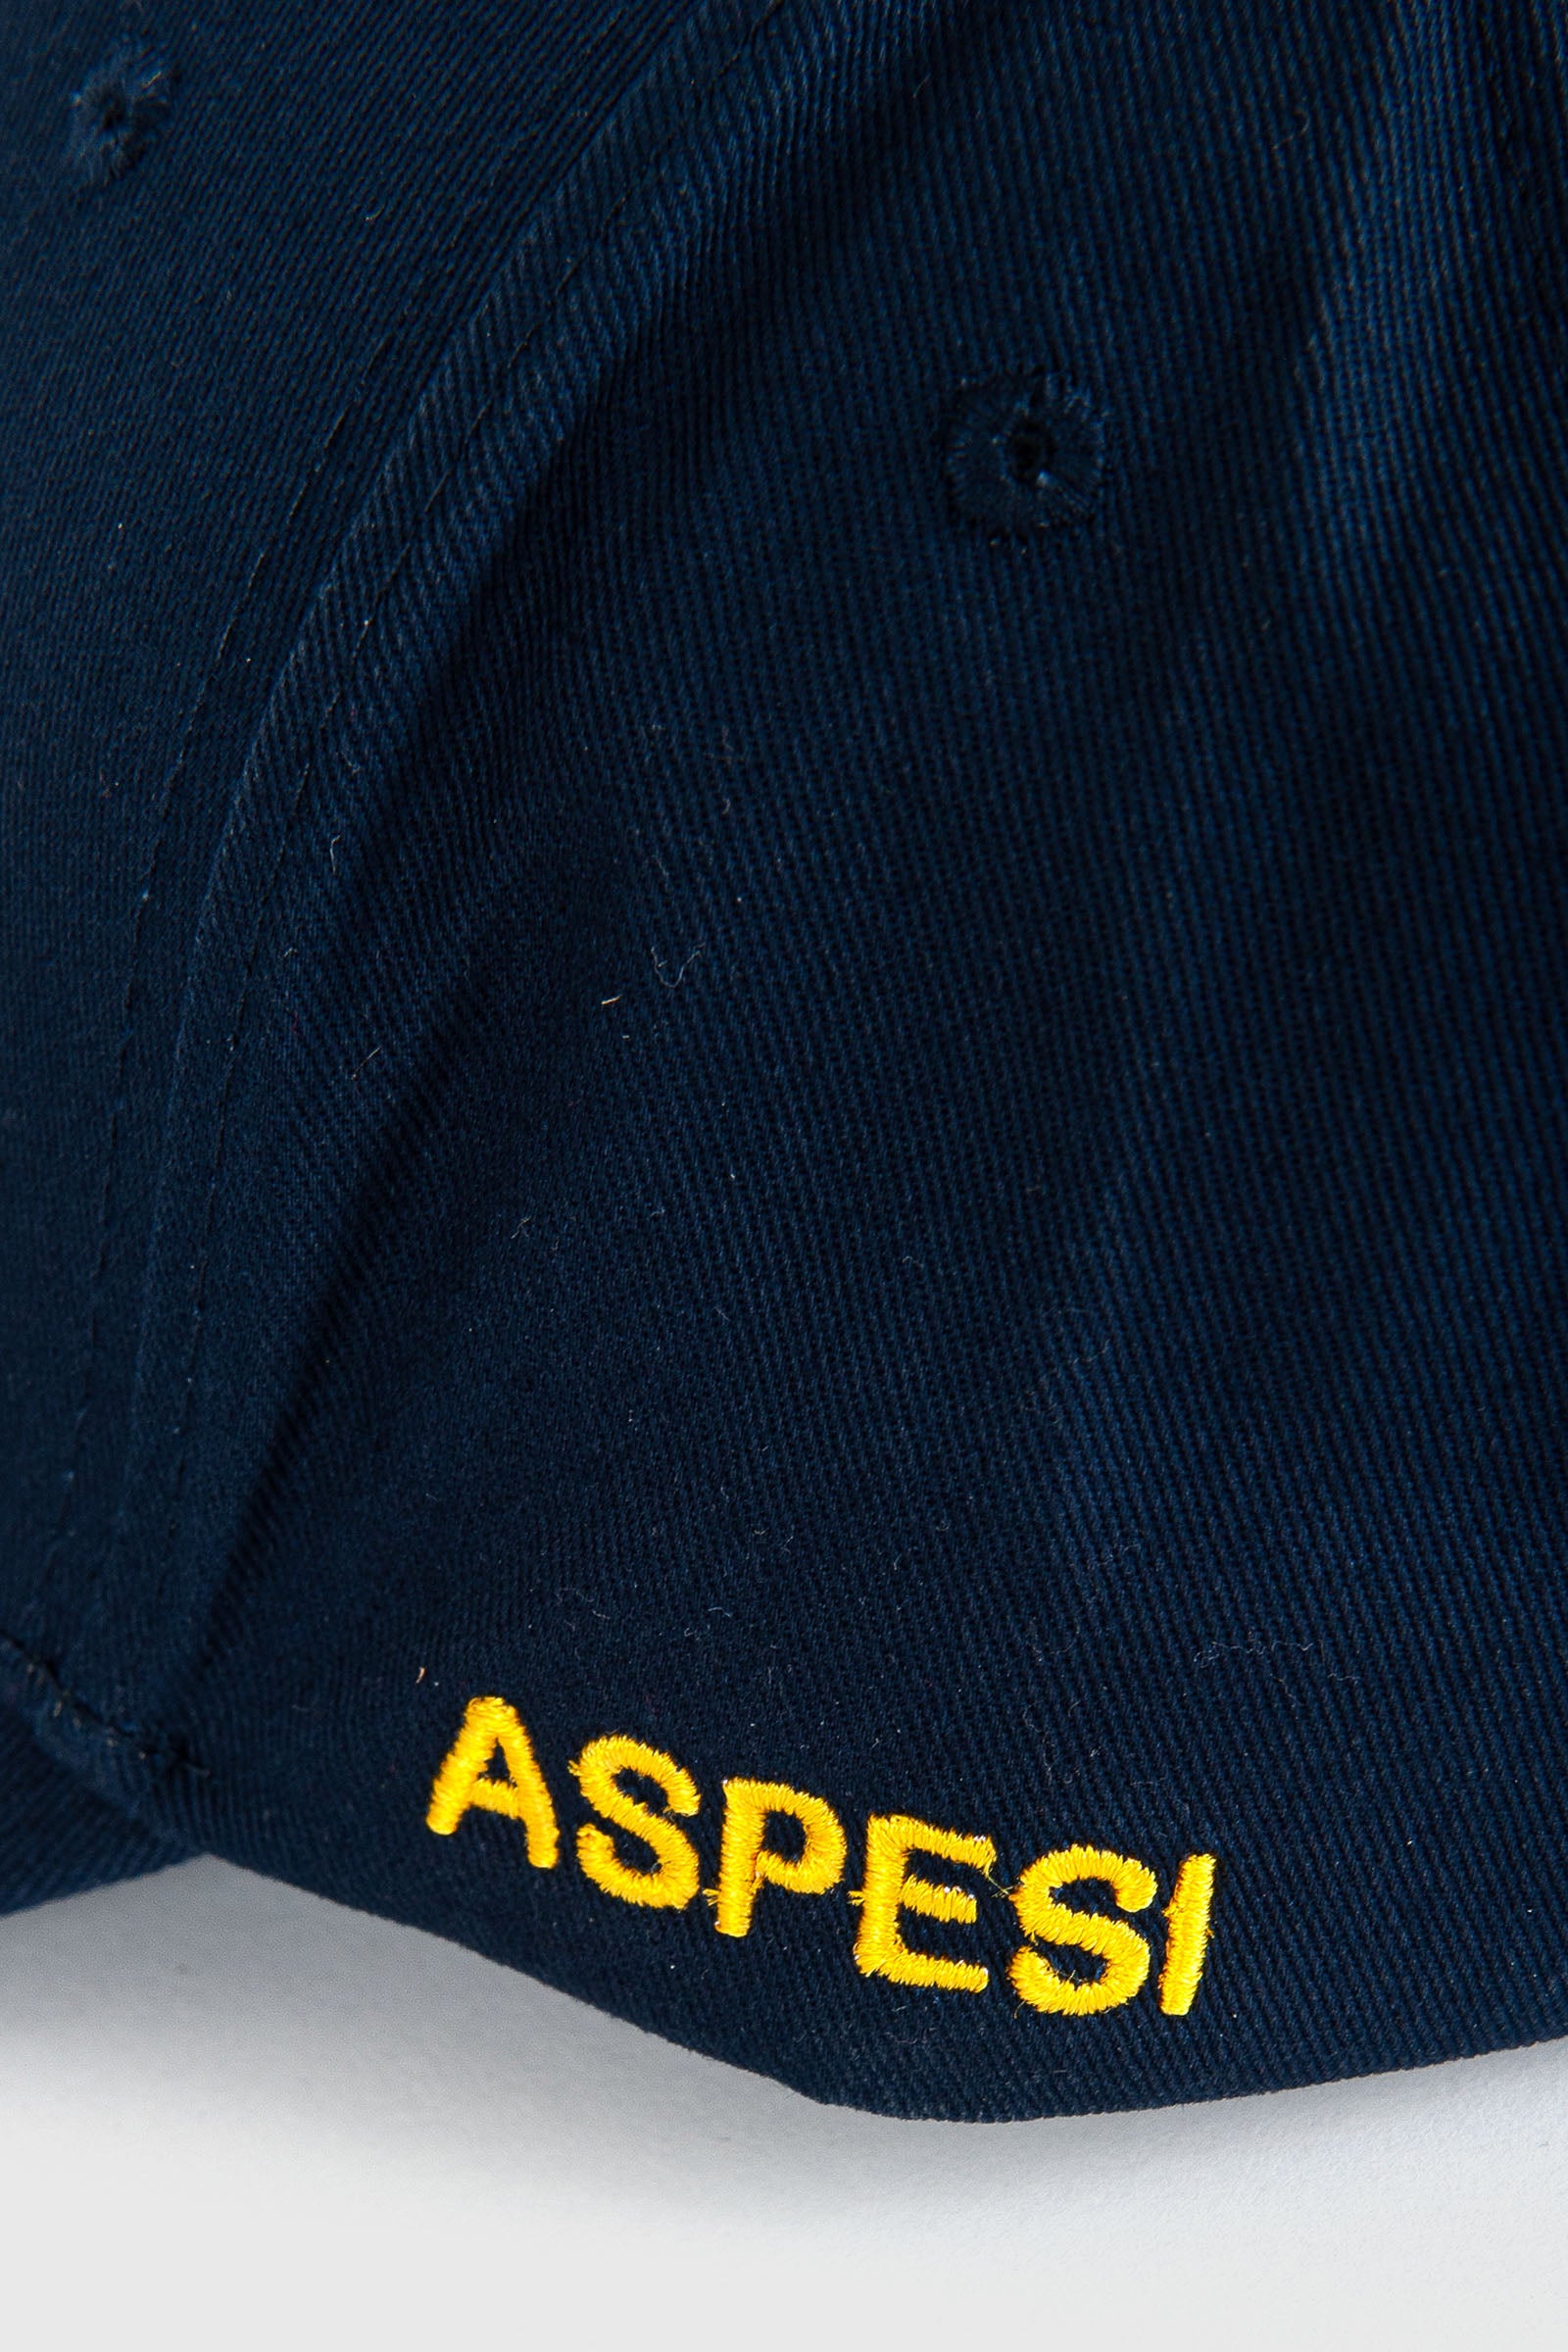 Aspesi Cotton Blue Hat - 3